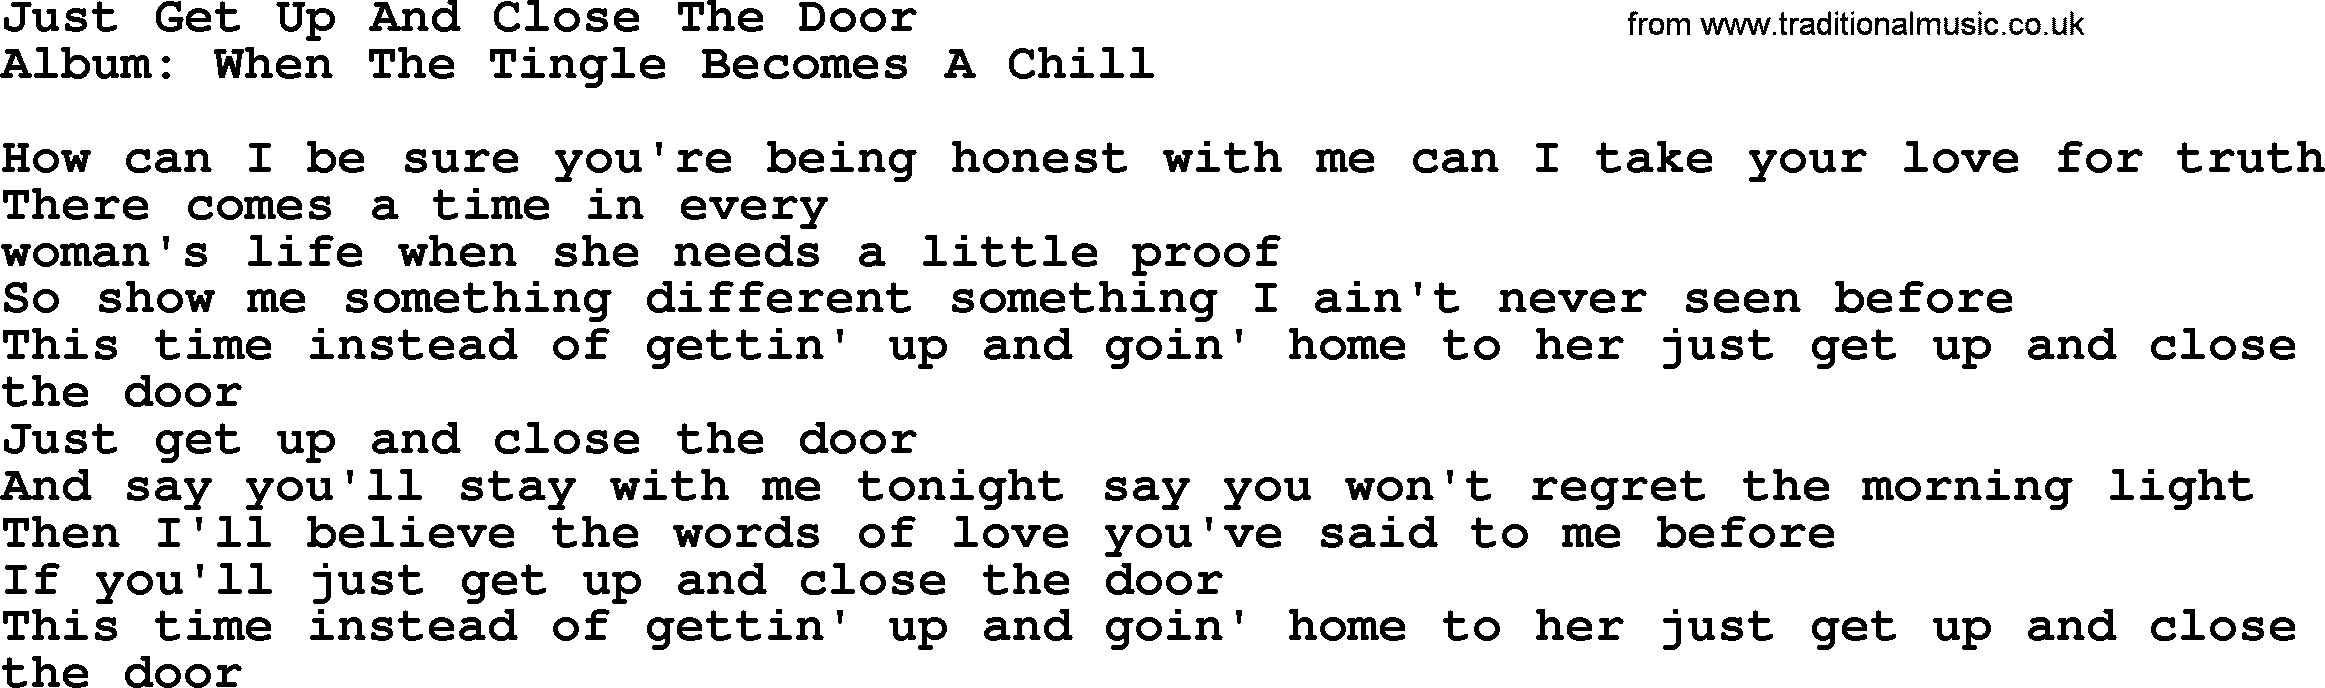 Loretta Lynn song: Just Get Up And Close The Door lyrics